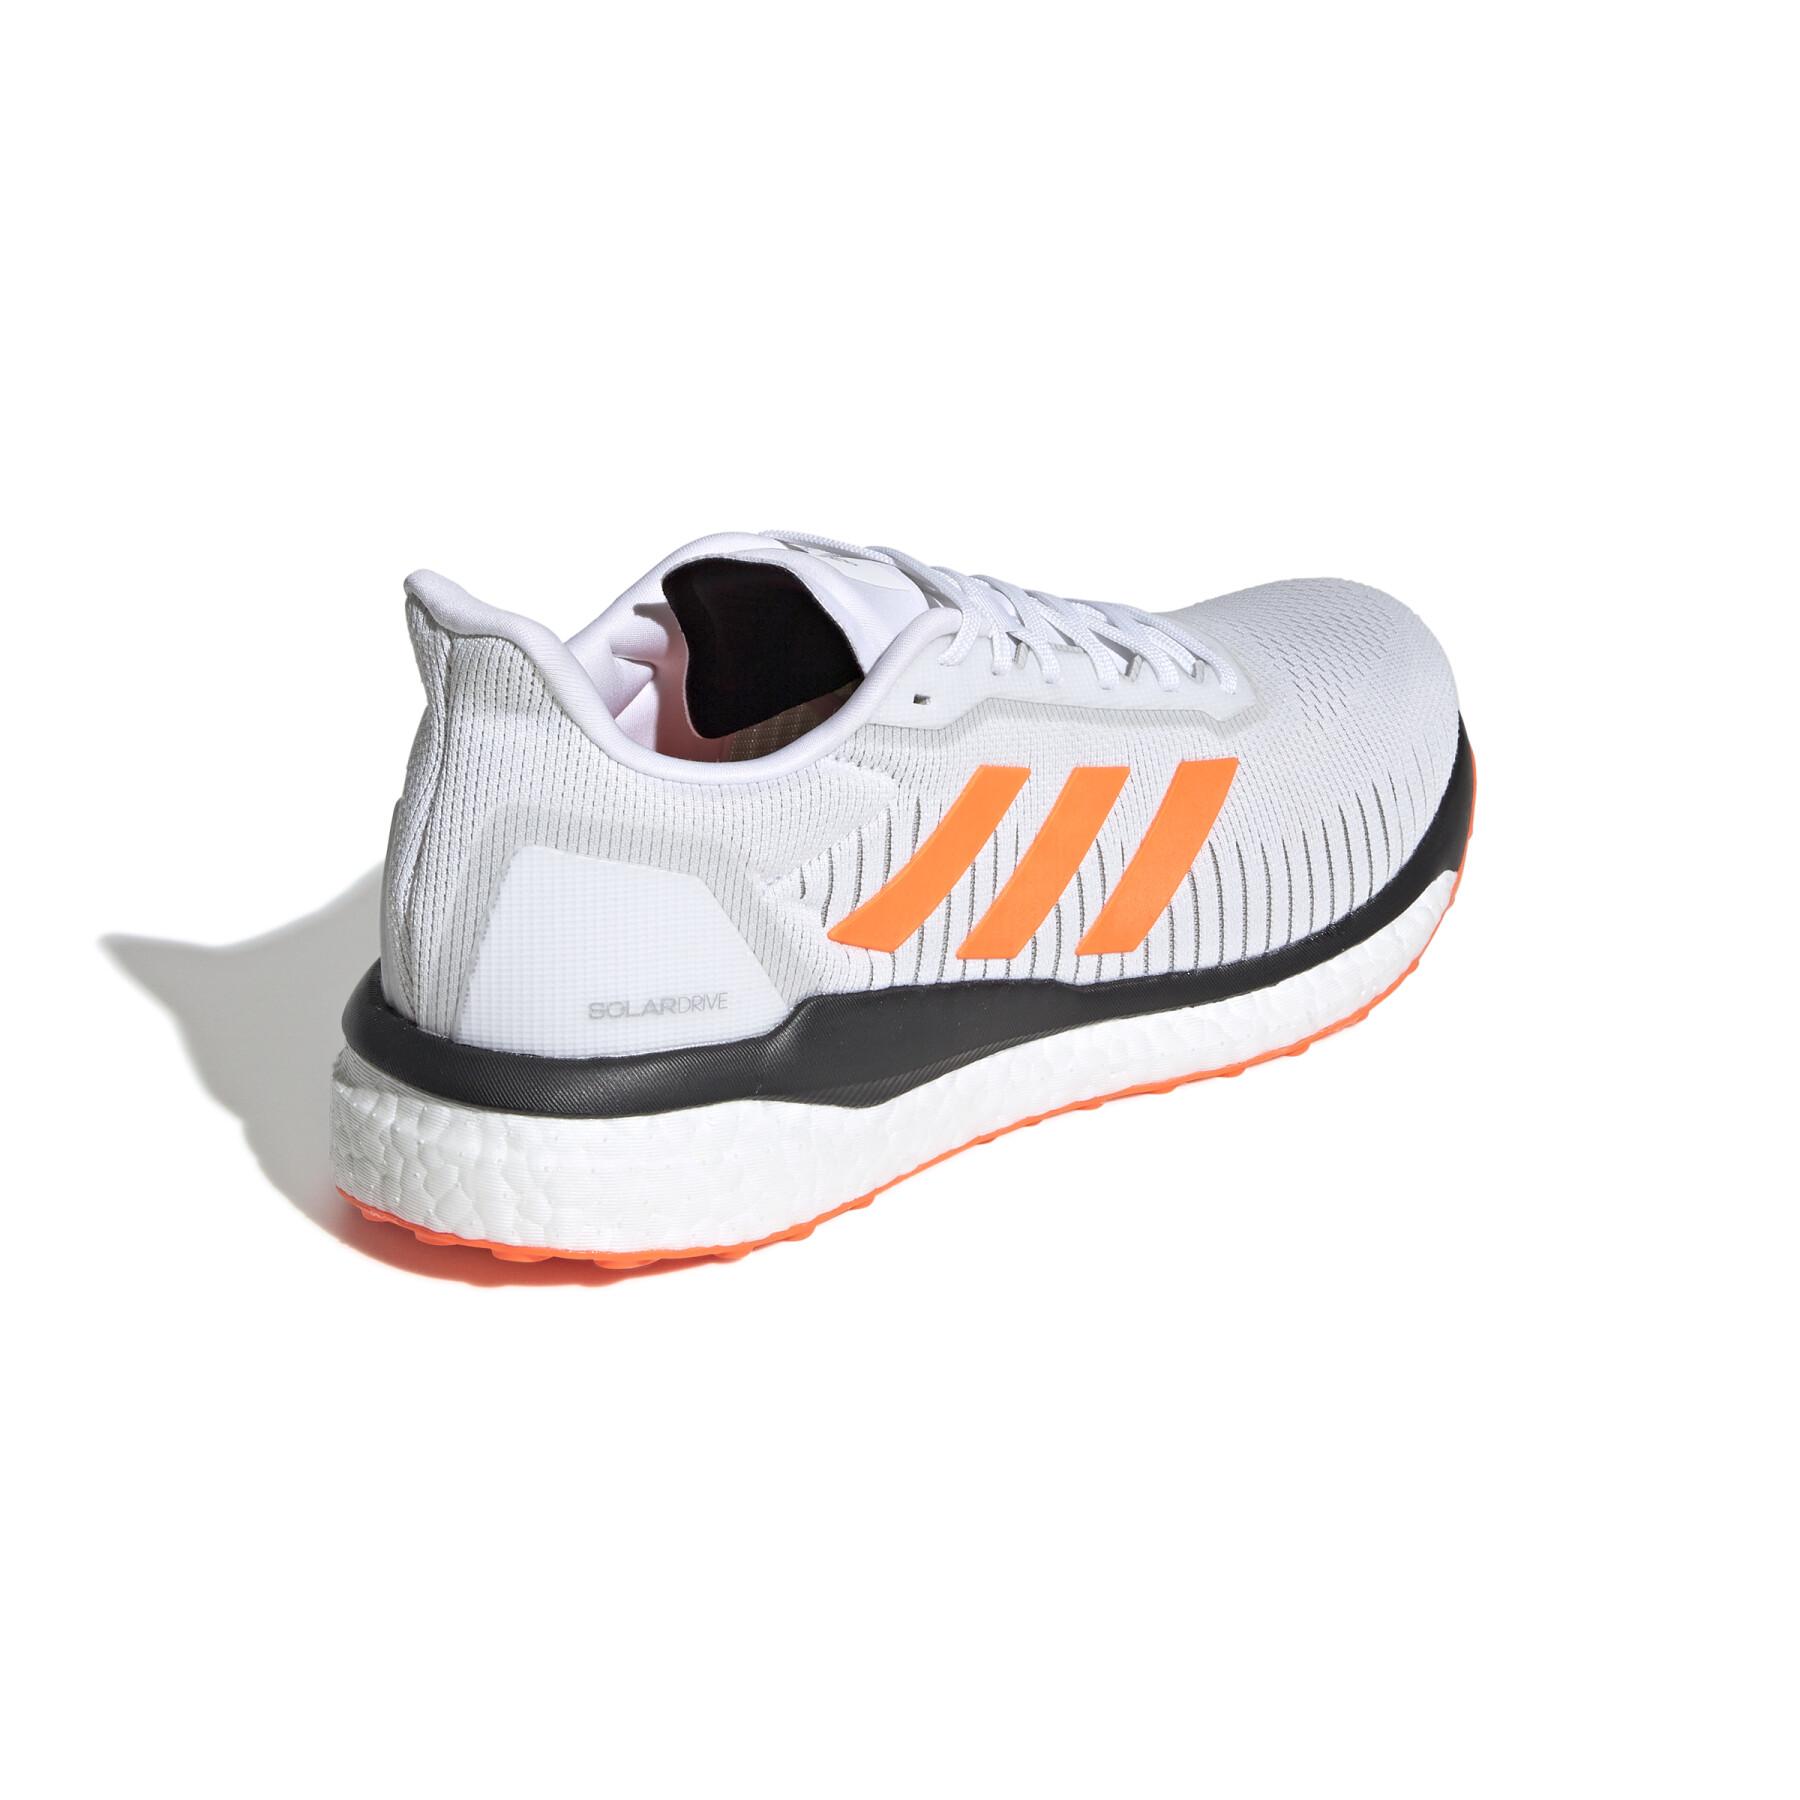 Sapatos adidas Solar Drive 19